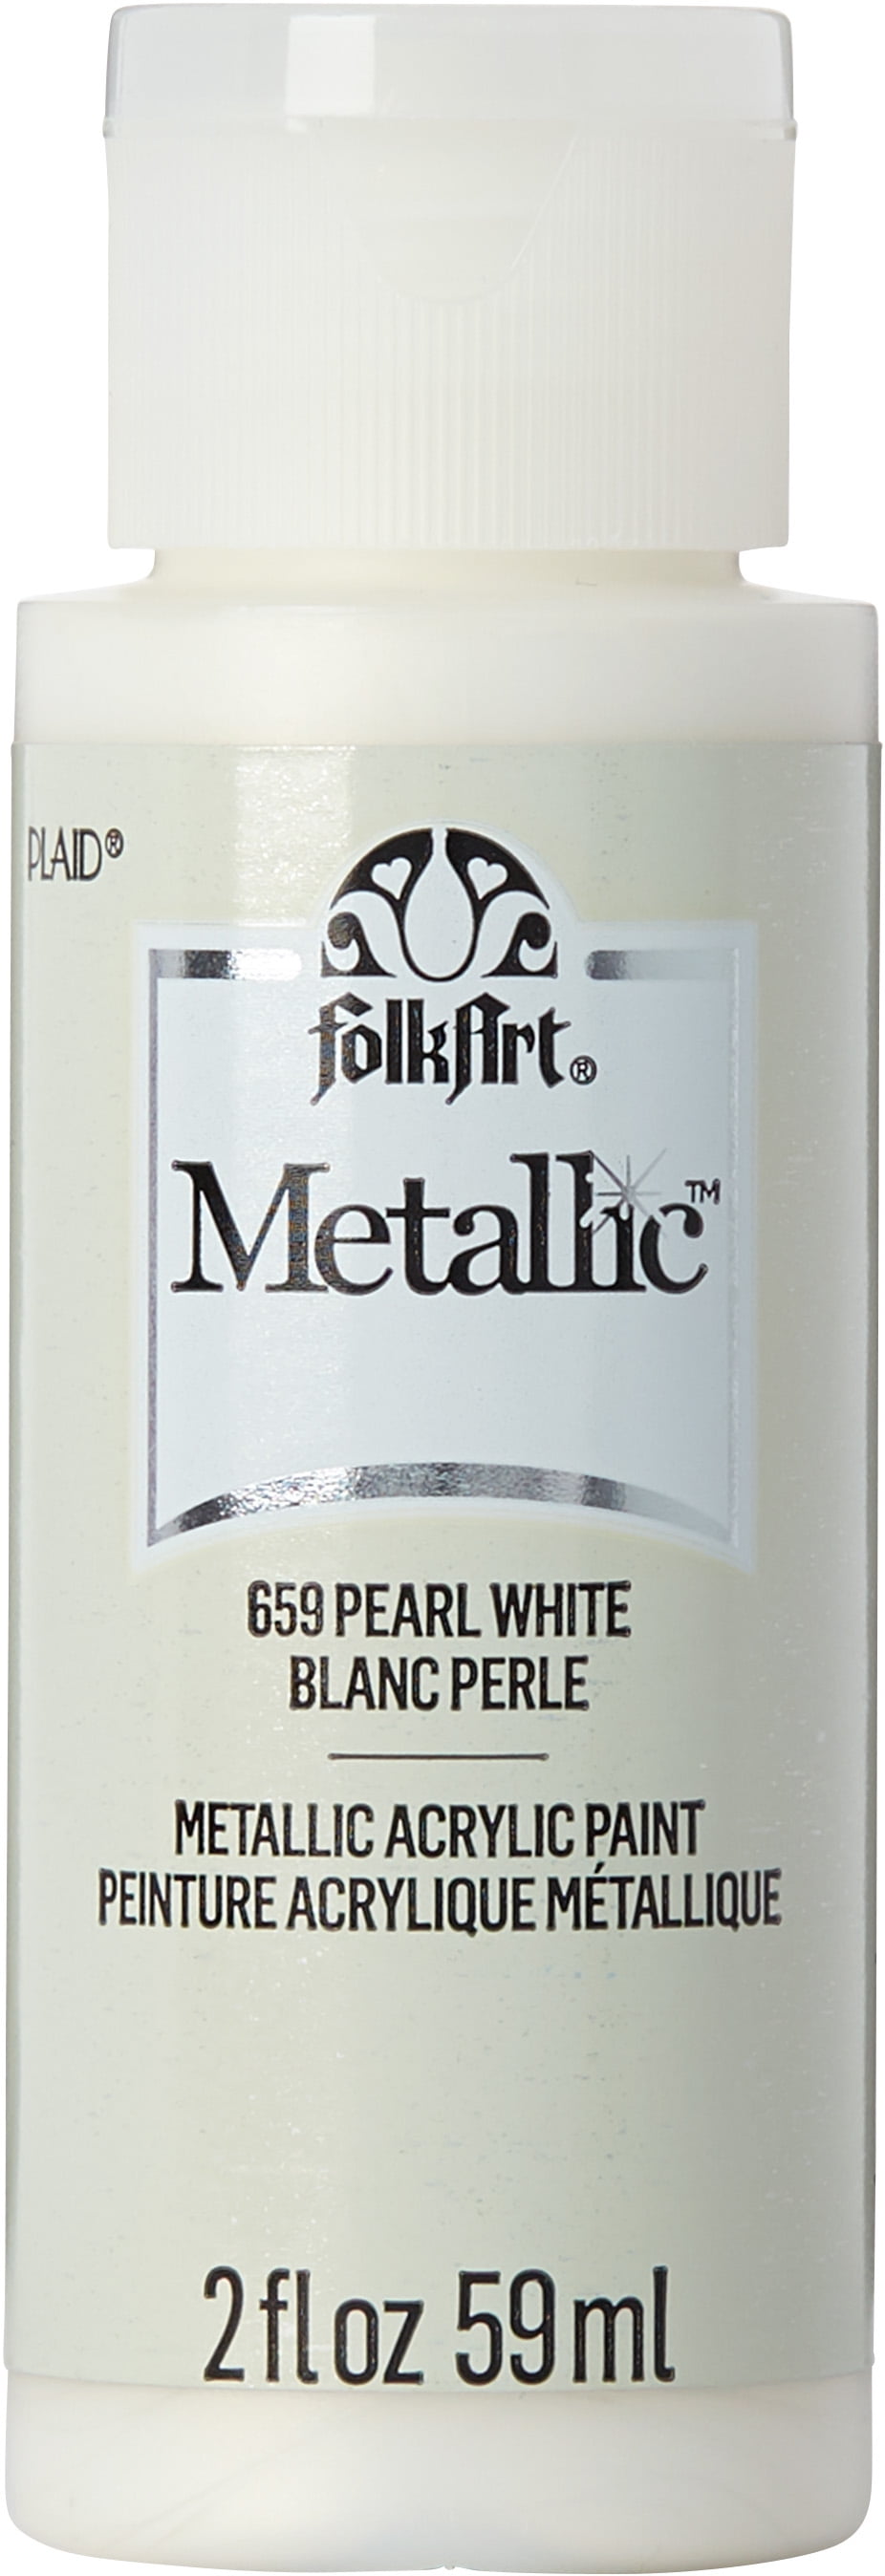 FolkArt Metallic Acrylic Craft Paint, Metallic Finish, Pearl White, 2 fl oz